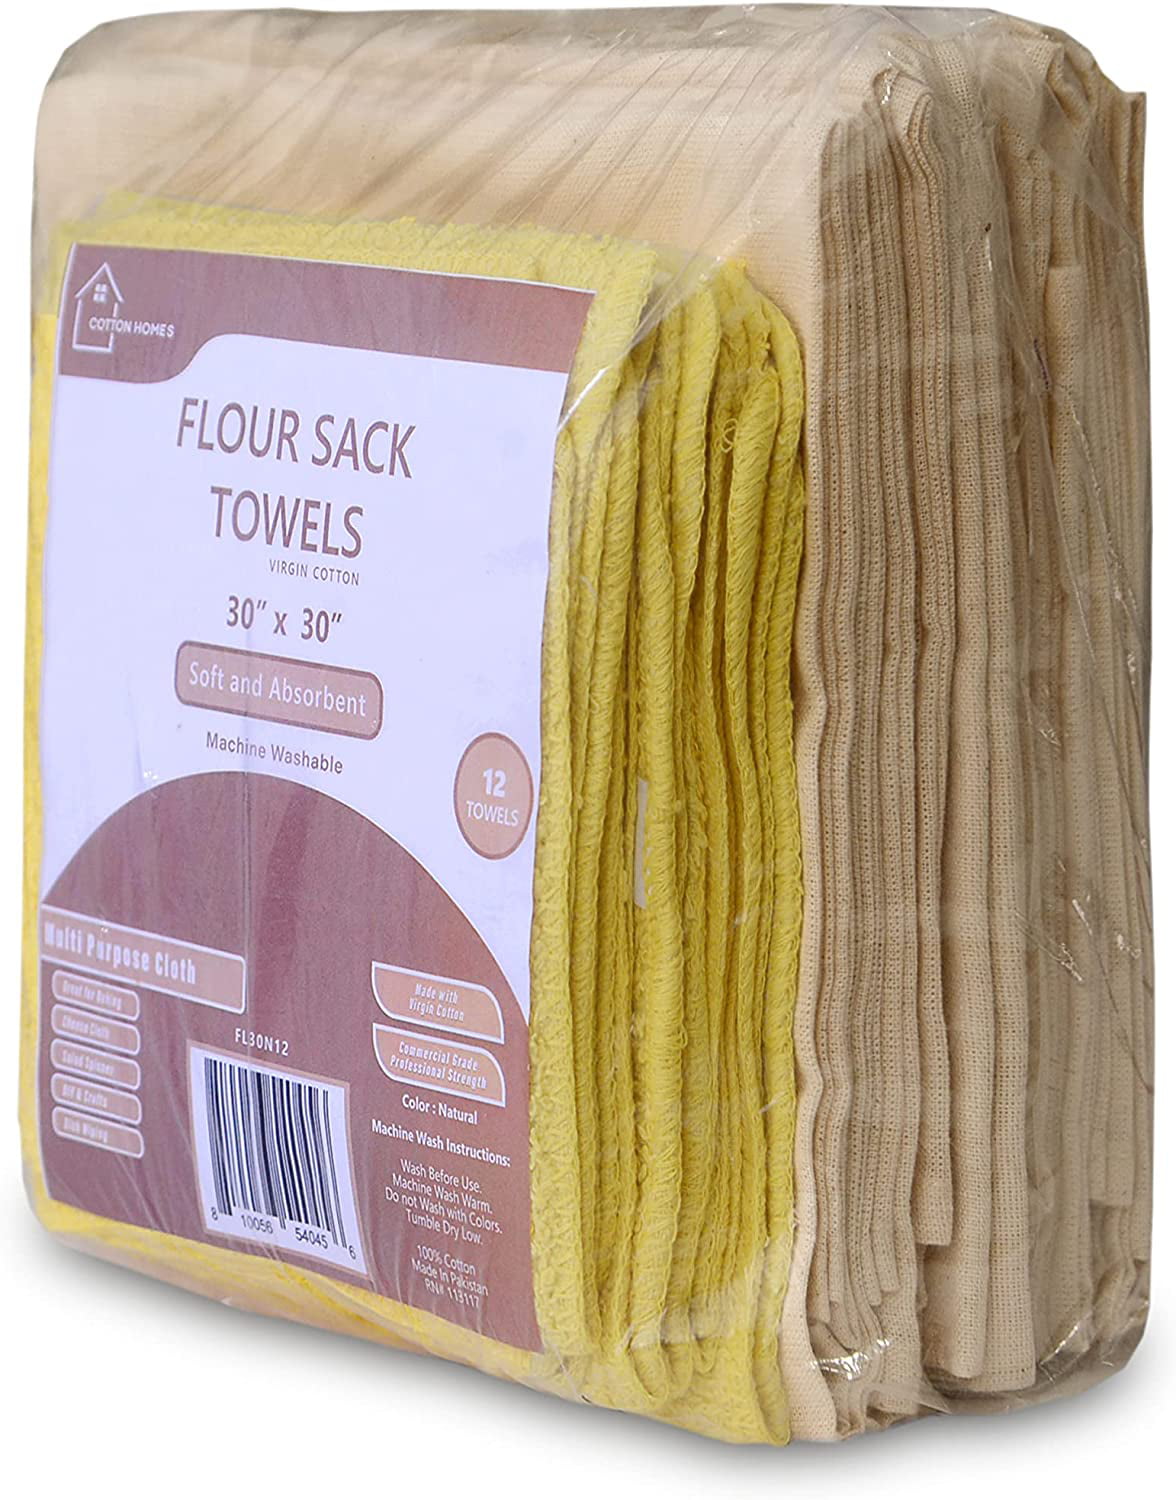 COTTON HOMES Flour Sack Kitchen Towels 24 Pack Multi-Purpose